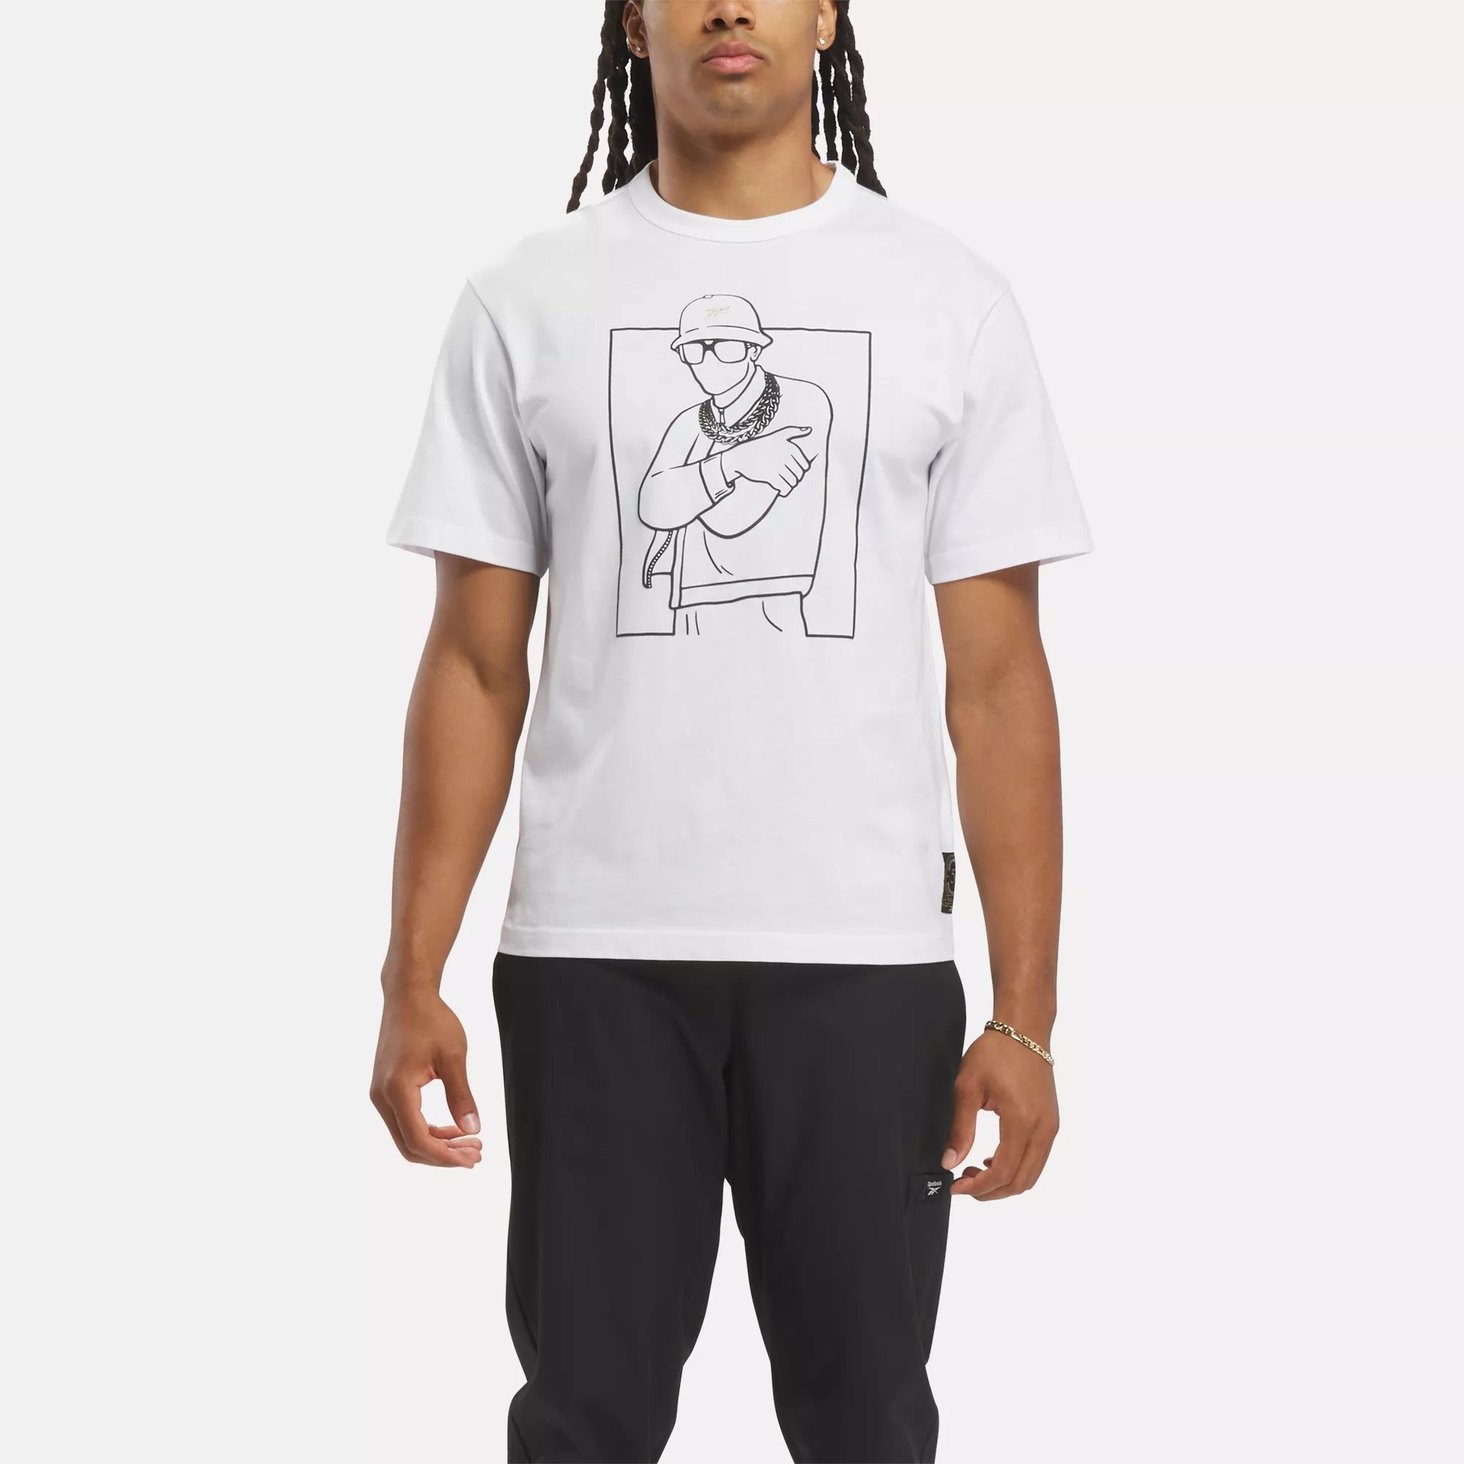 Hip Hop B-Boy Pose T-Shirt